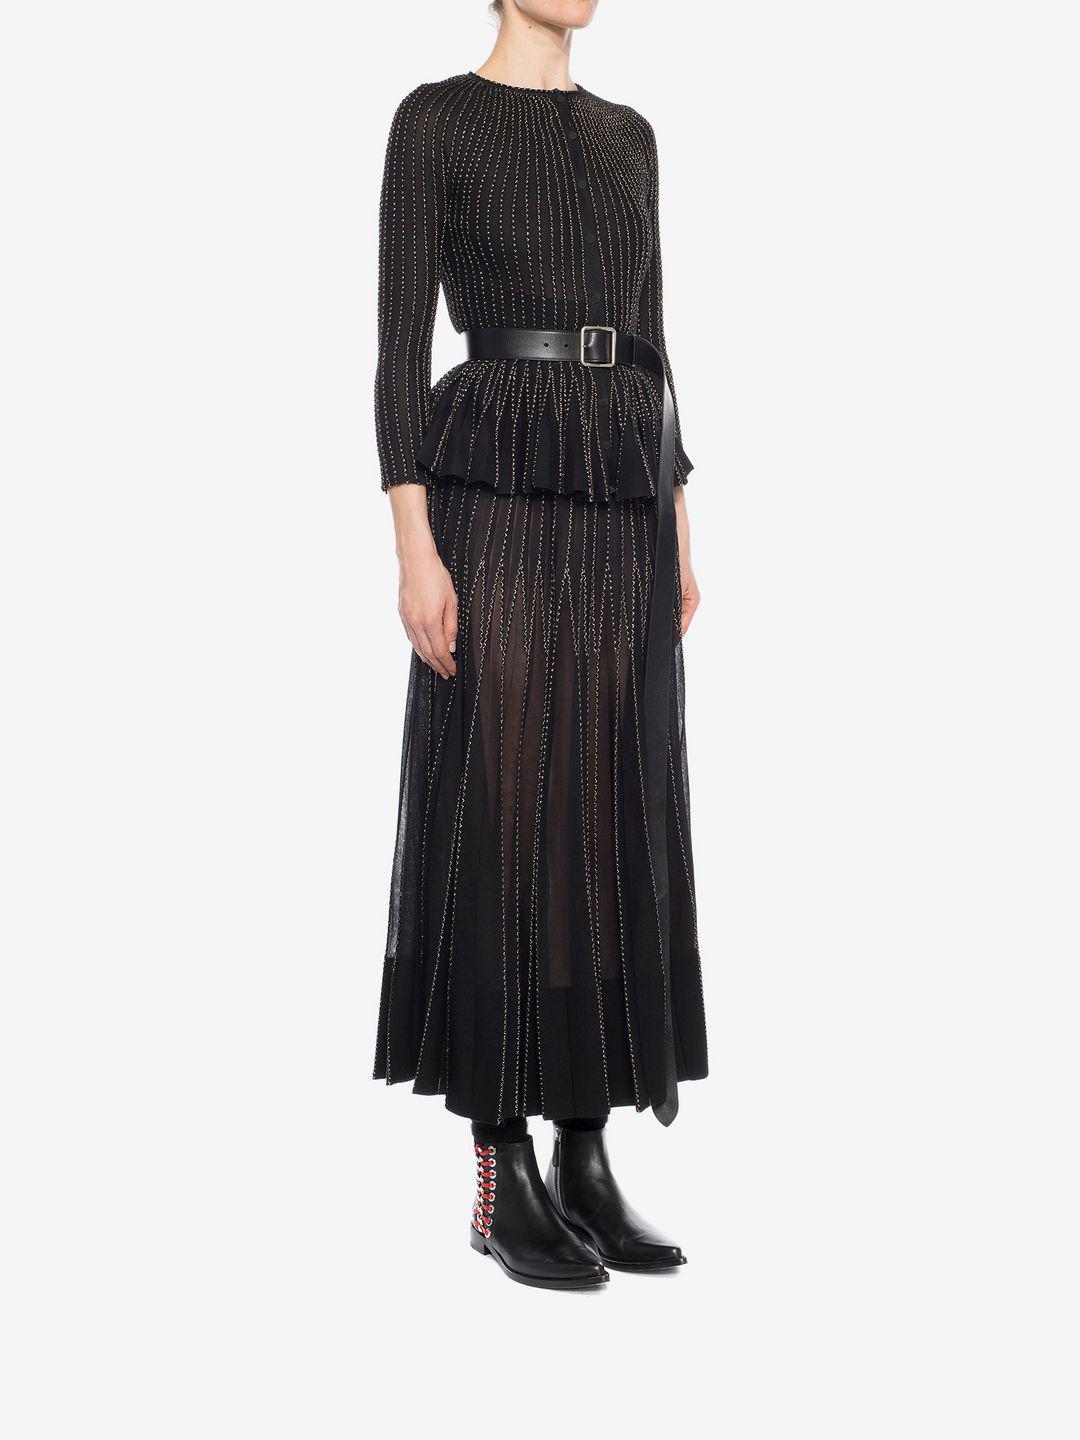 Lyst - Alexander Mcqueen Skirt in Black